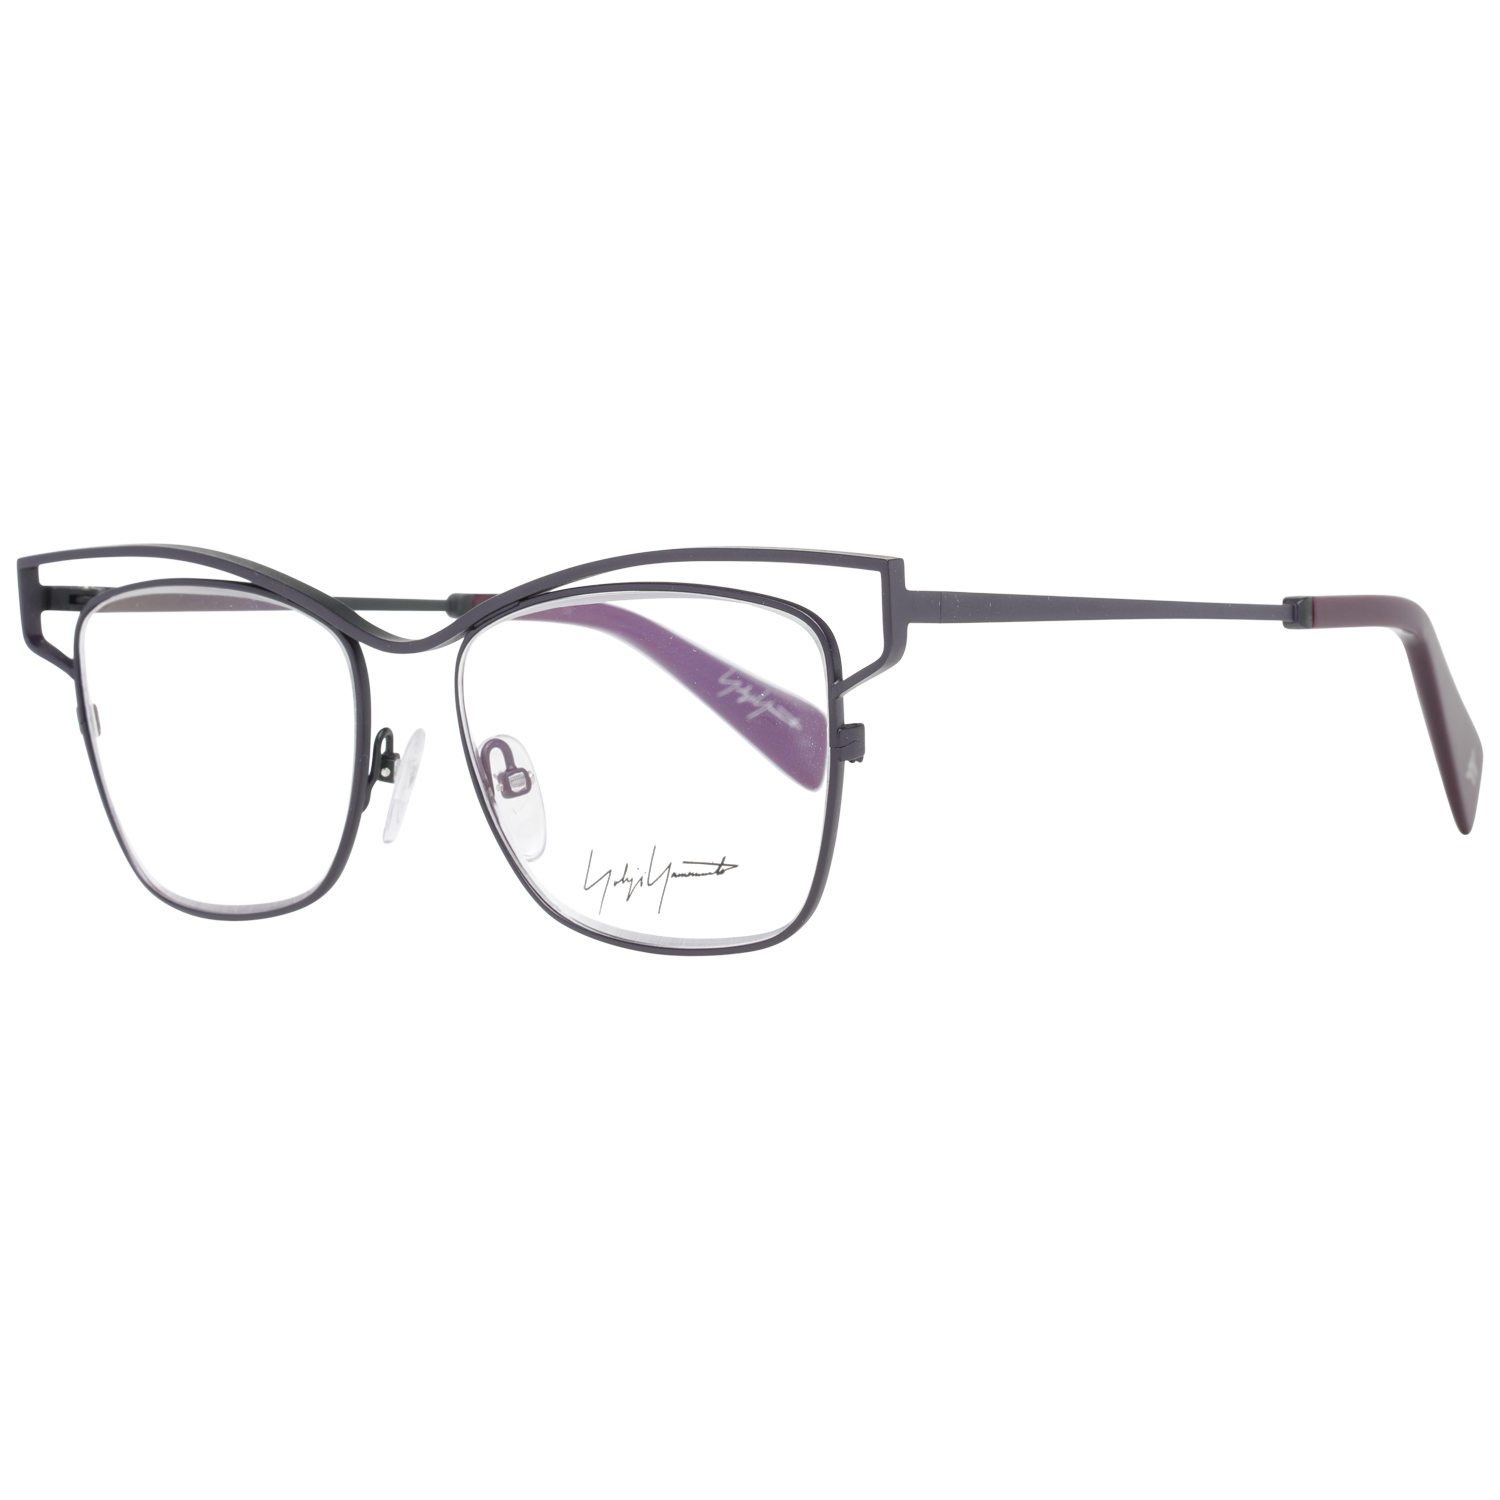 Yohji Yamamoto Frames Yohji Yamamoto Optical Frame YY3019 701 51 Eyeglasses Eyewear UK USA Australia 